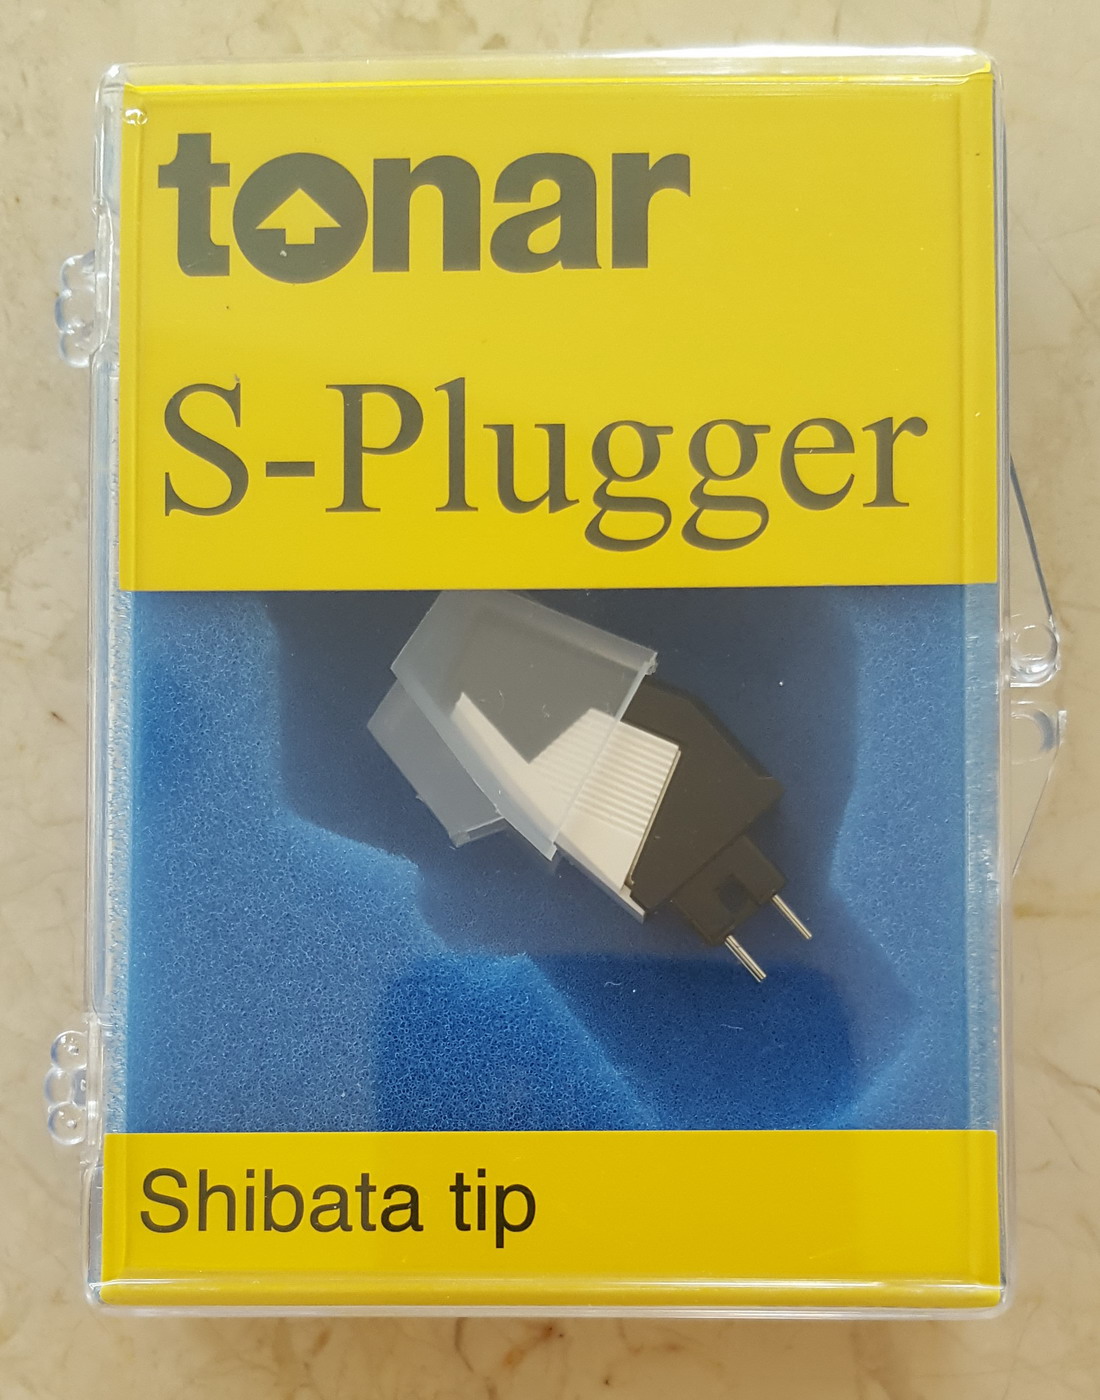  ,  : Tonar S-Plugger T4P (Shibata tip), art. 9590